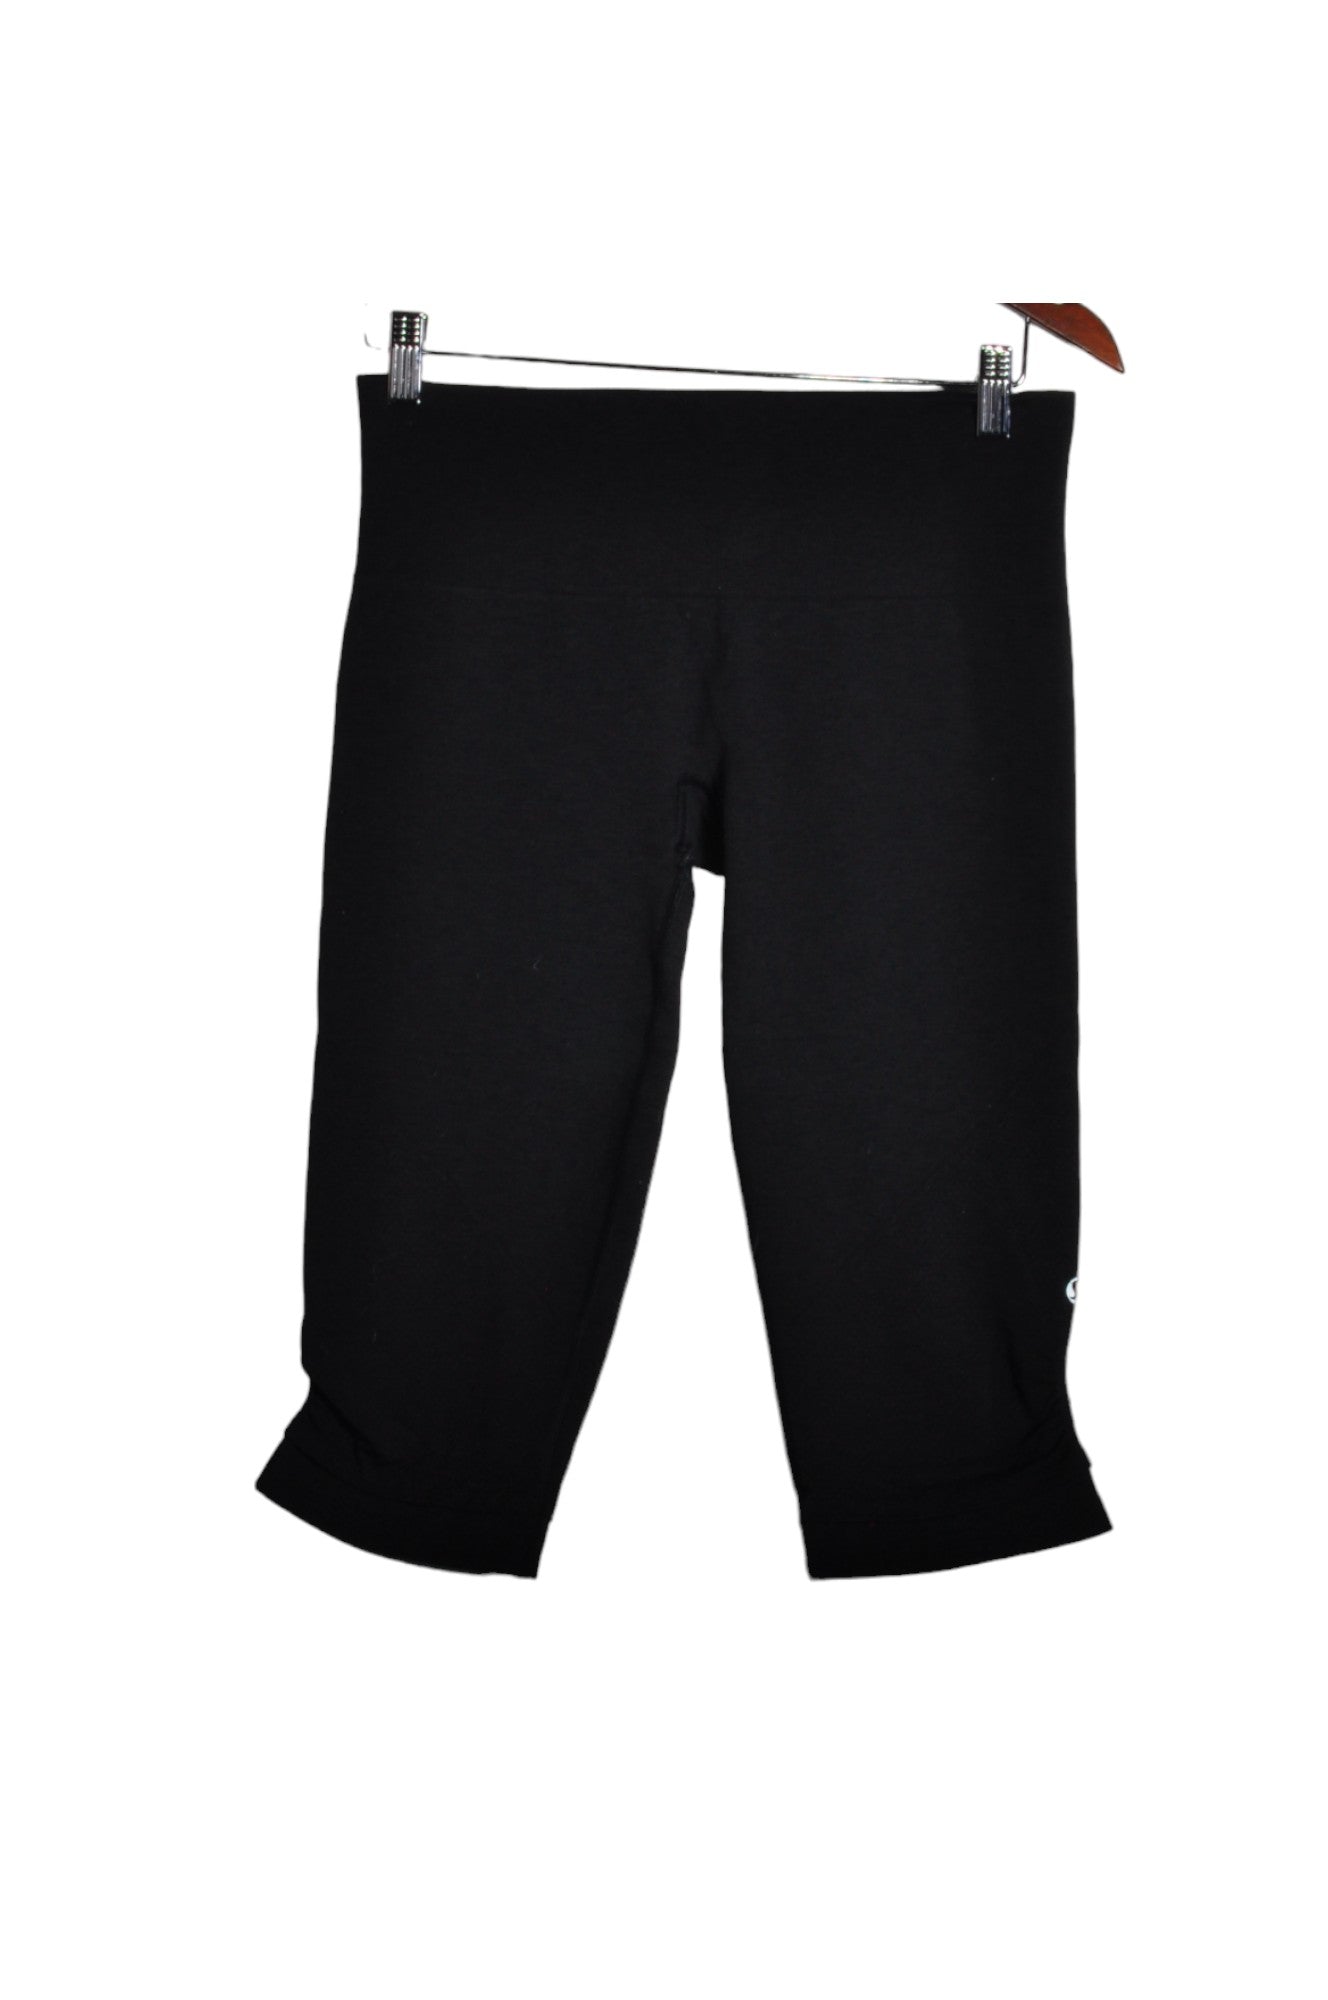 UNBRANDED Women Activewear Leggings Regular fit in Gray - Size S | 11.99 $ KOOP